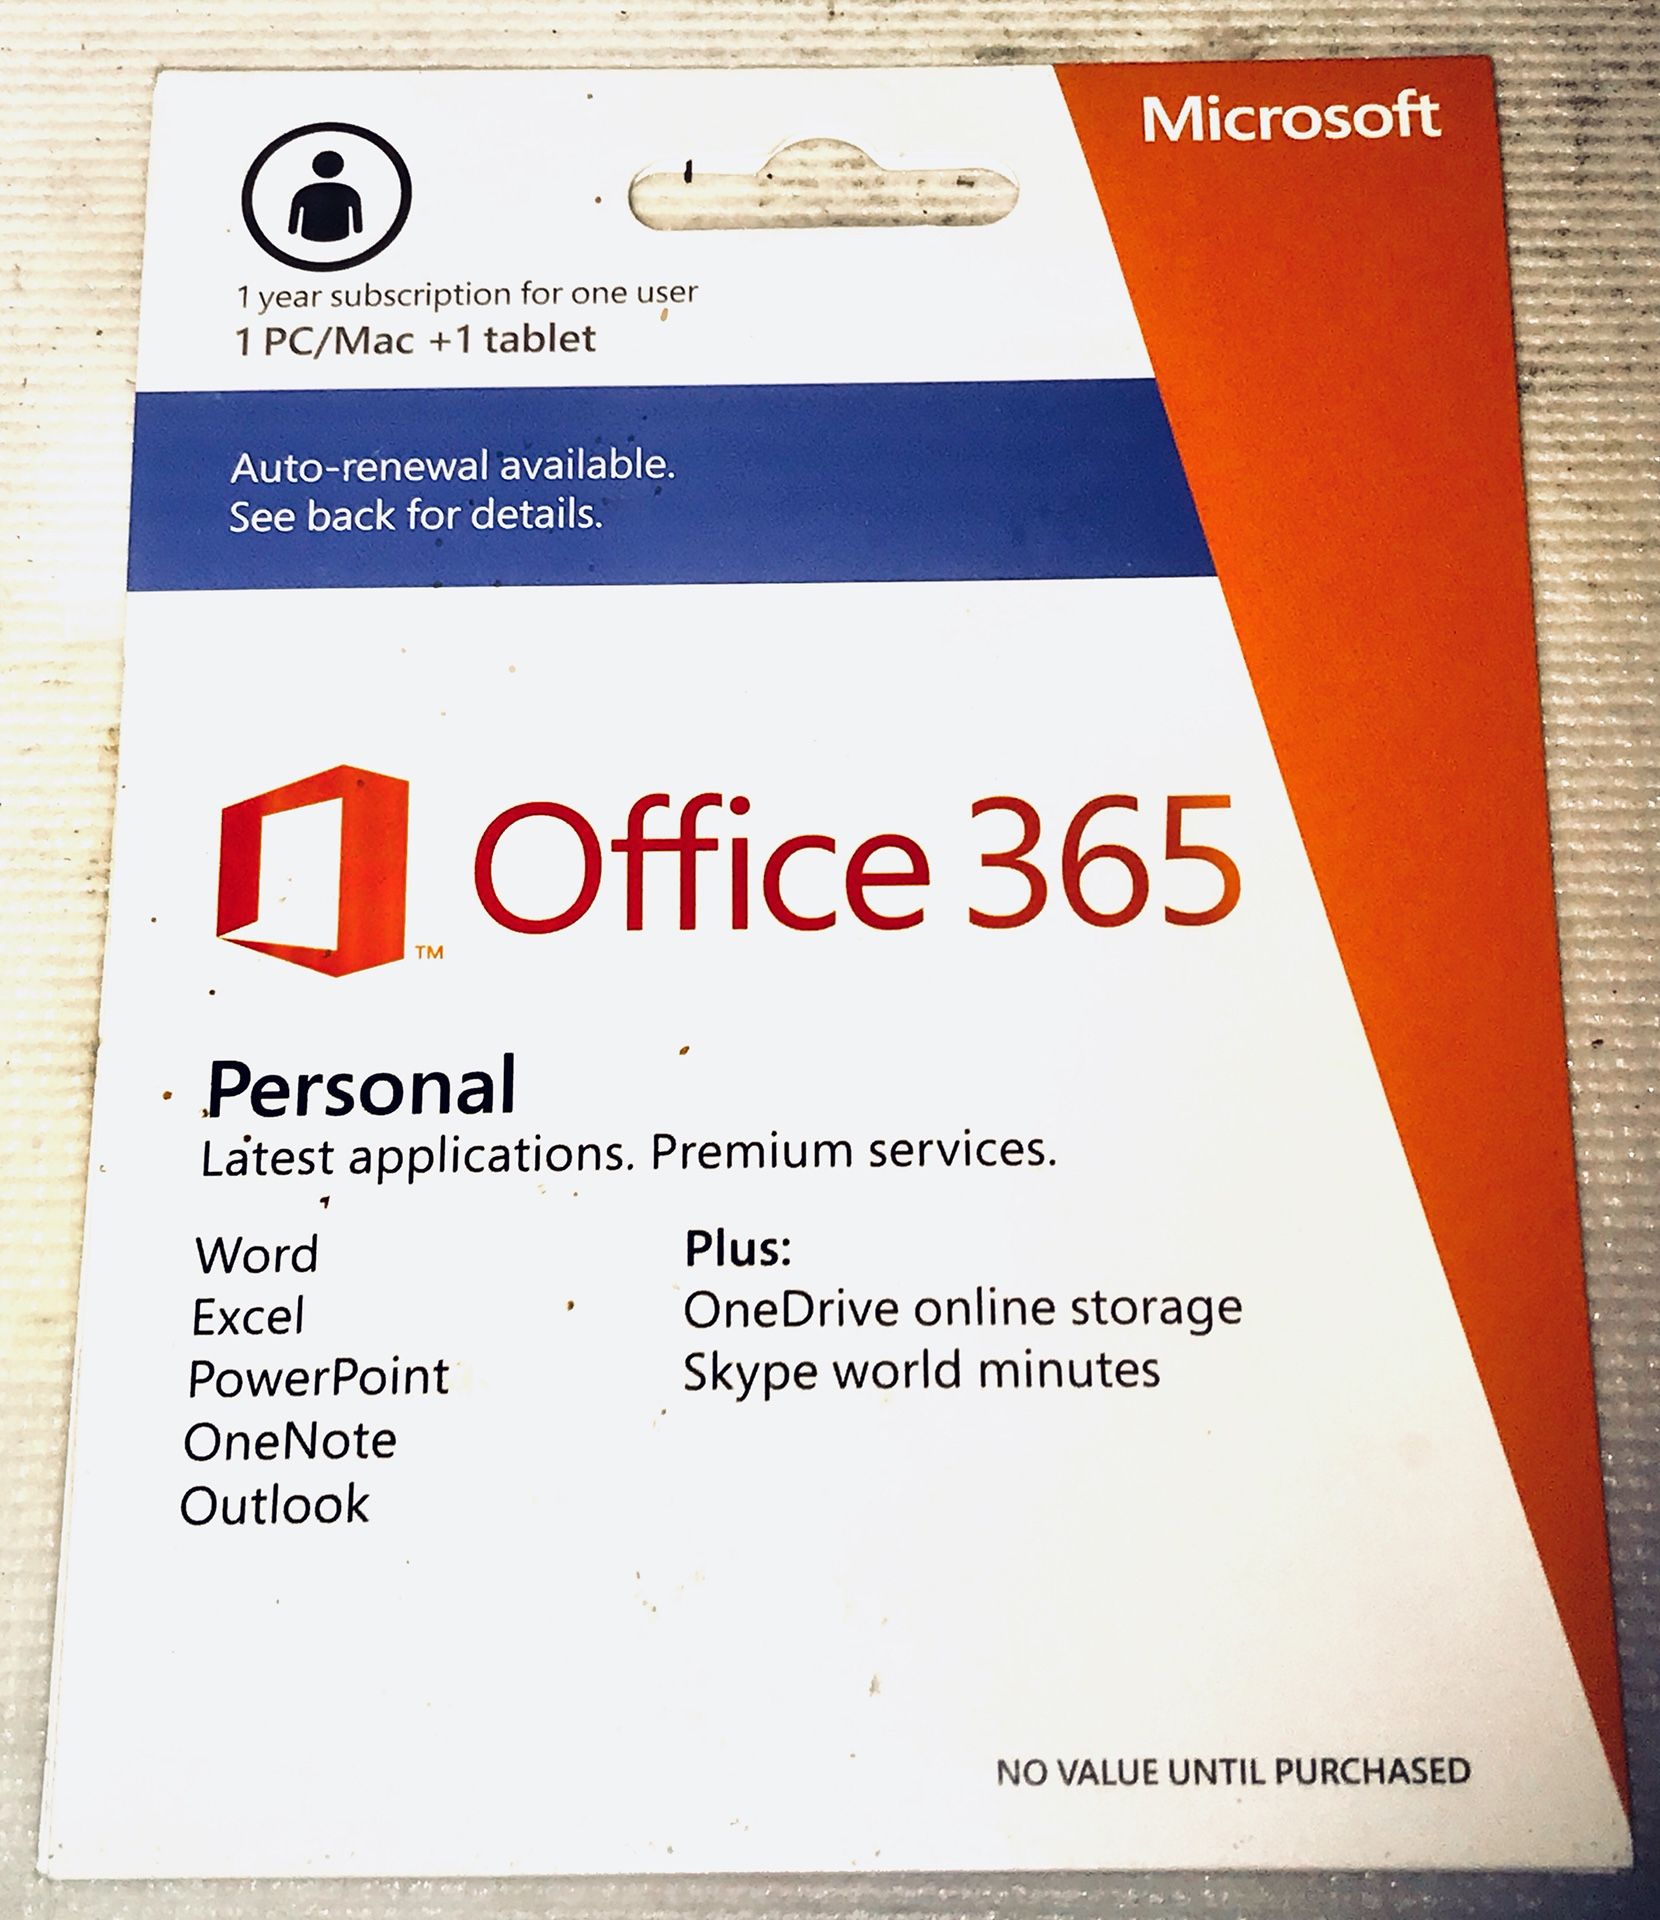 Microsoft Office 365 (1 Year Subscription)